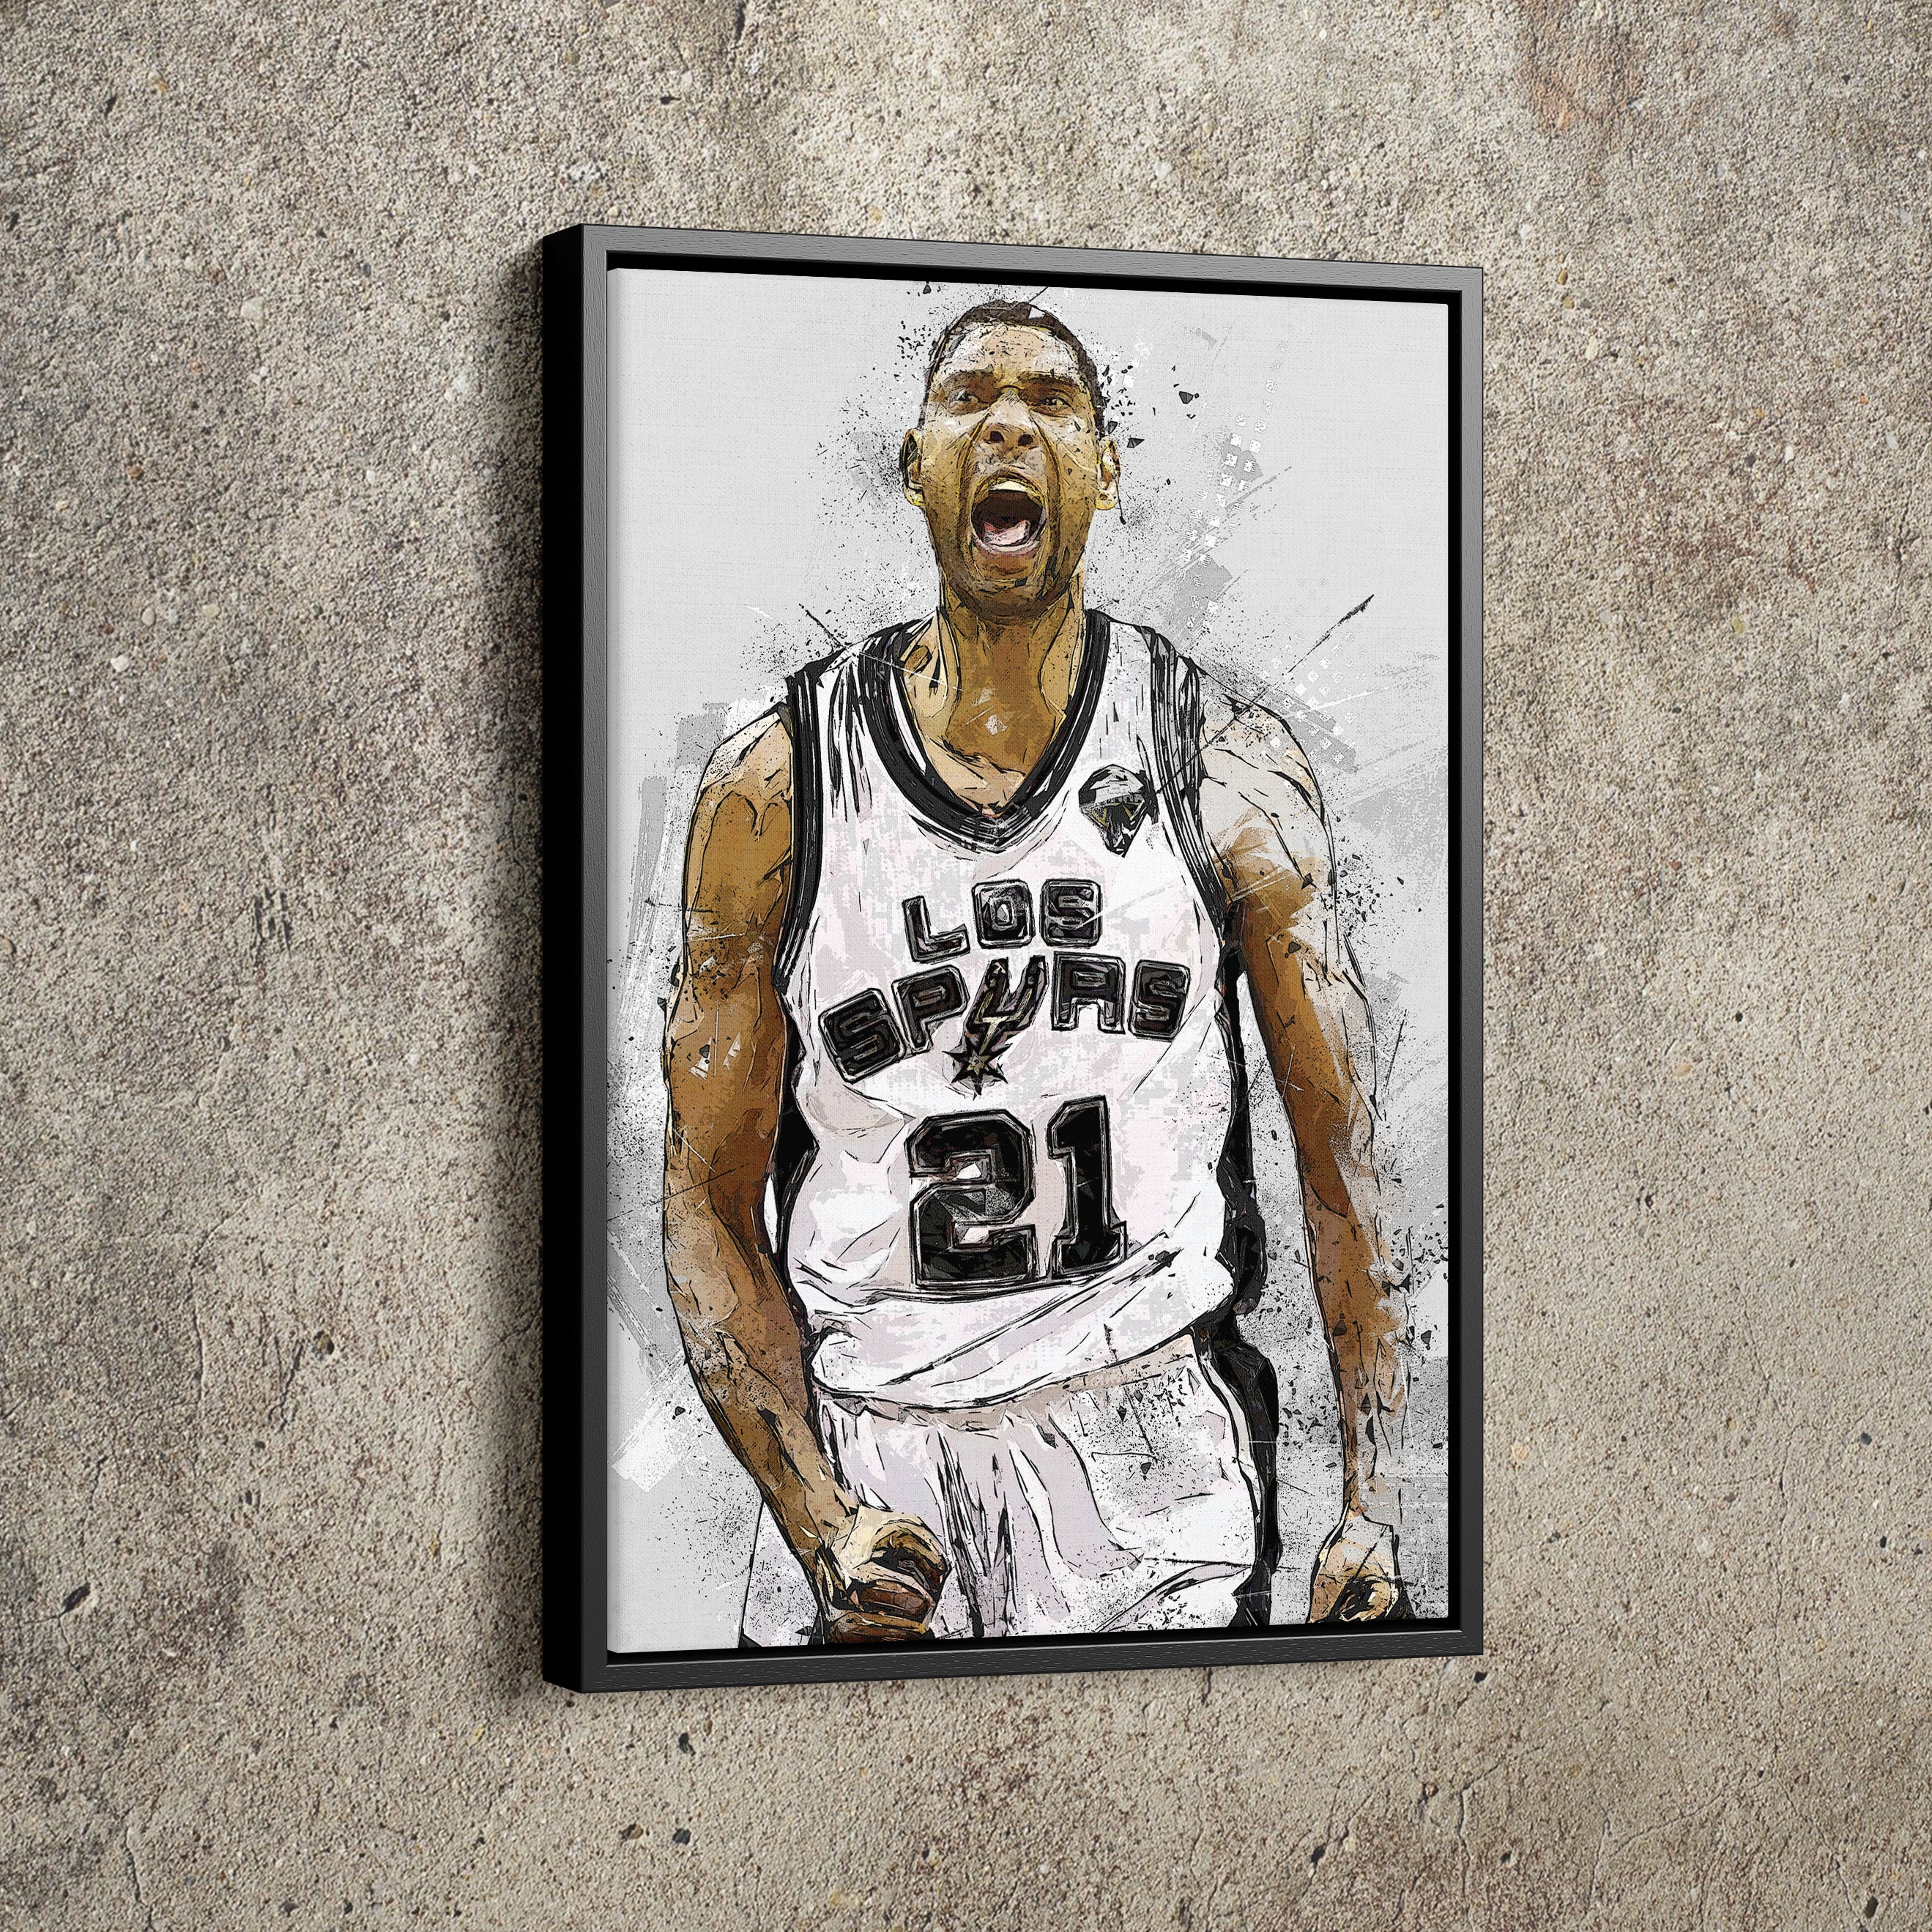 11"x14" 24"x36" 9"x11" 16"x20" 18"x24" Details about   Tim Duncan Basketball Poster 